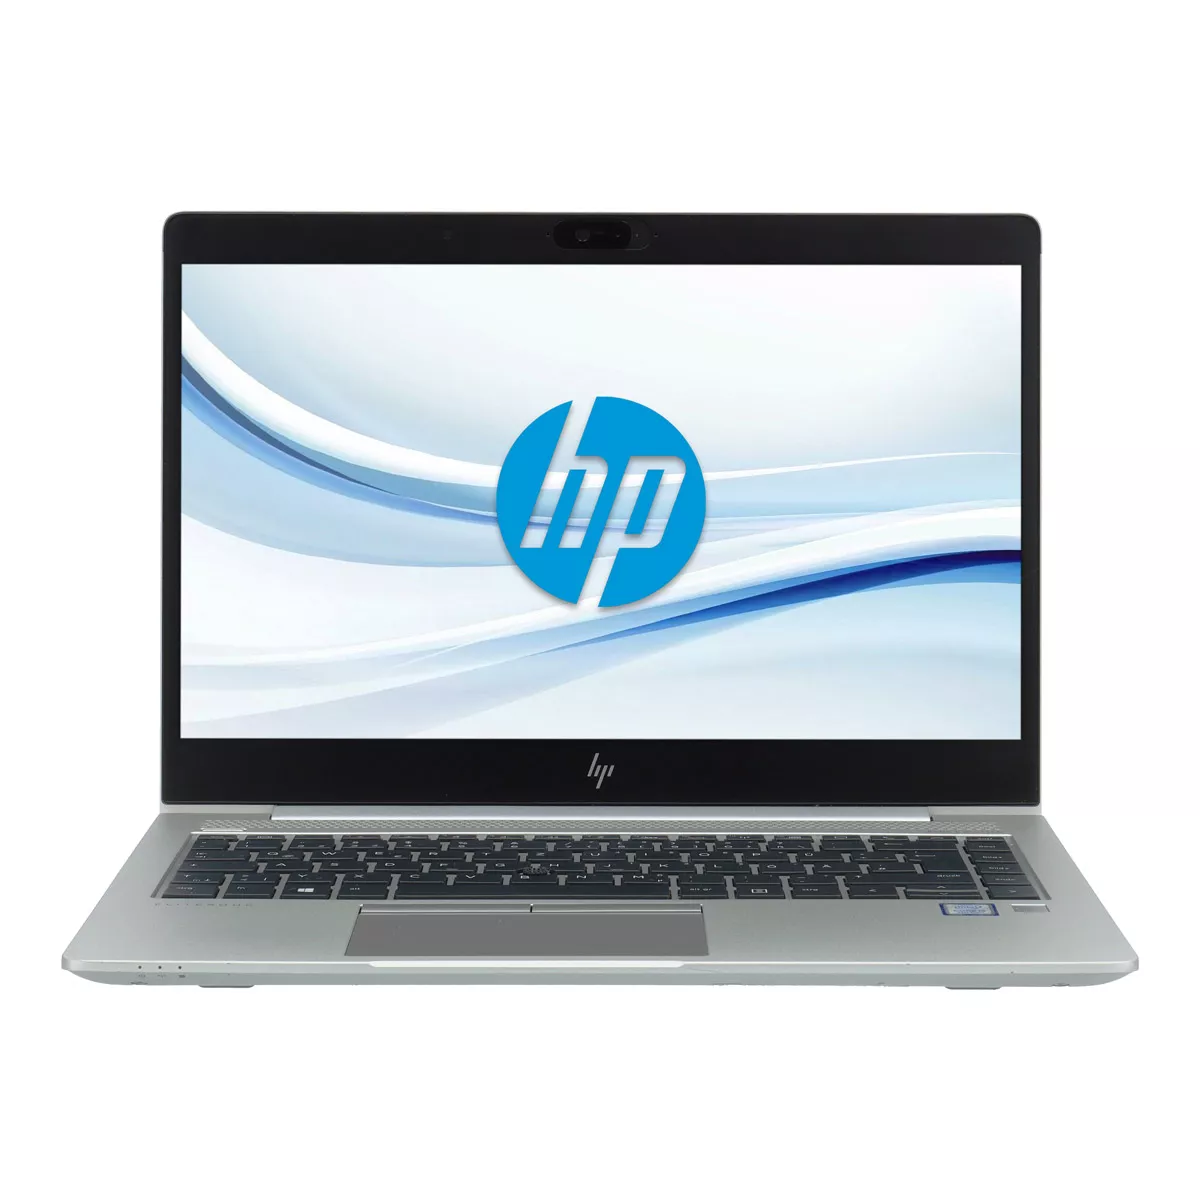 HP EliteBook 830 G5 Core i5 8350U Full-HD 240 m.2 SSD Webcam B